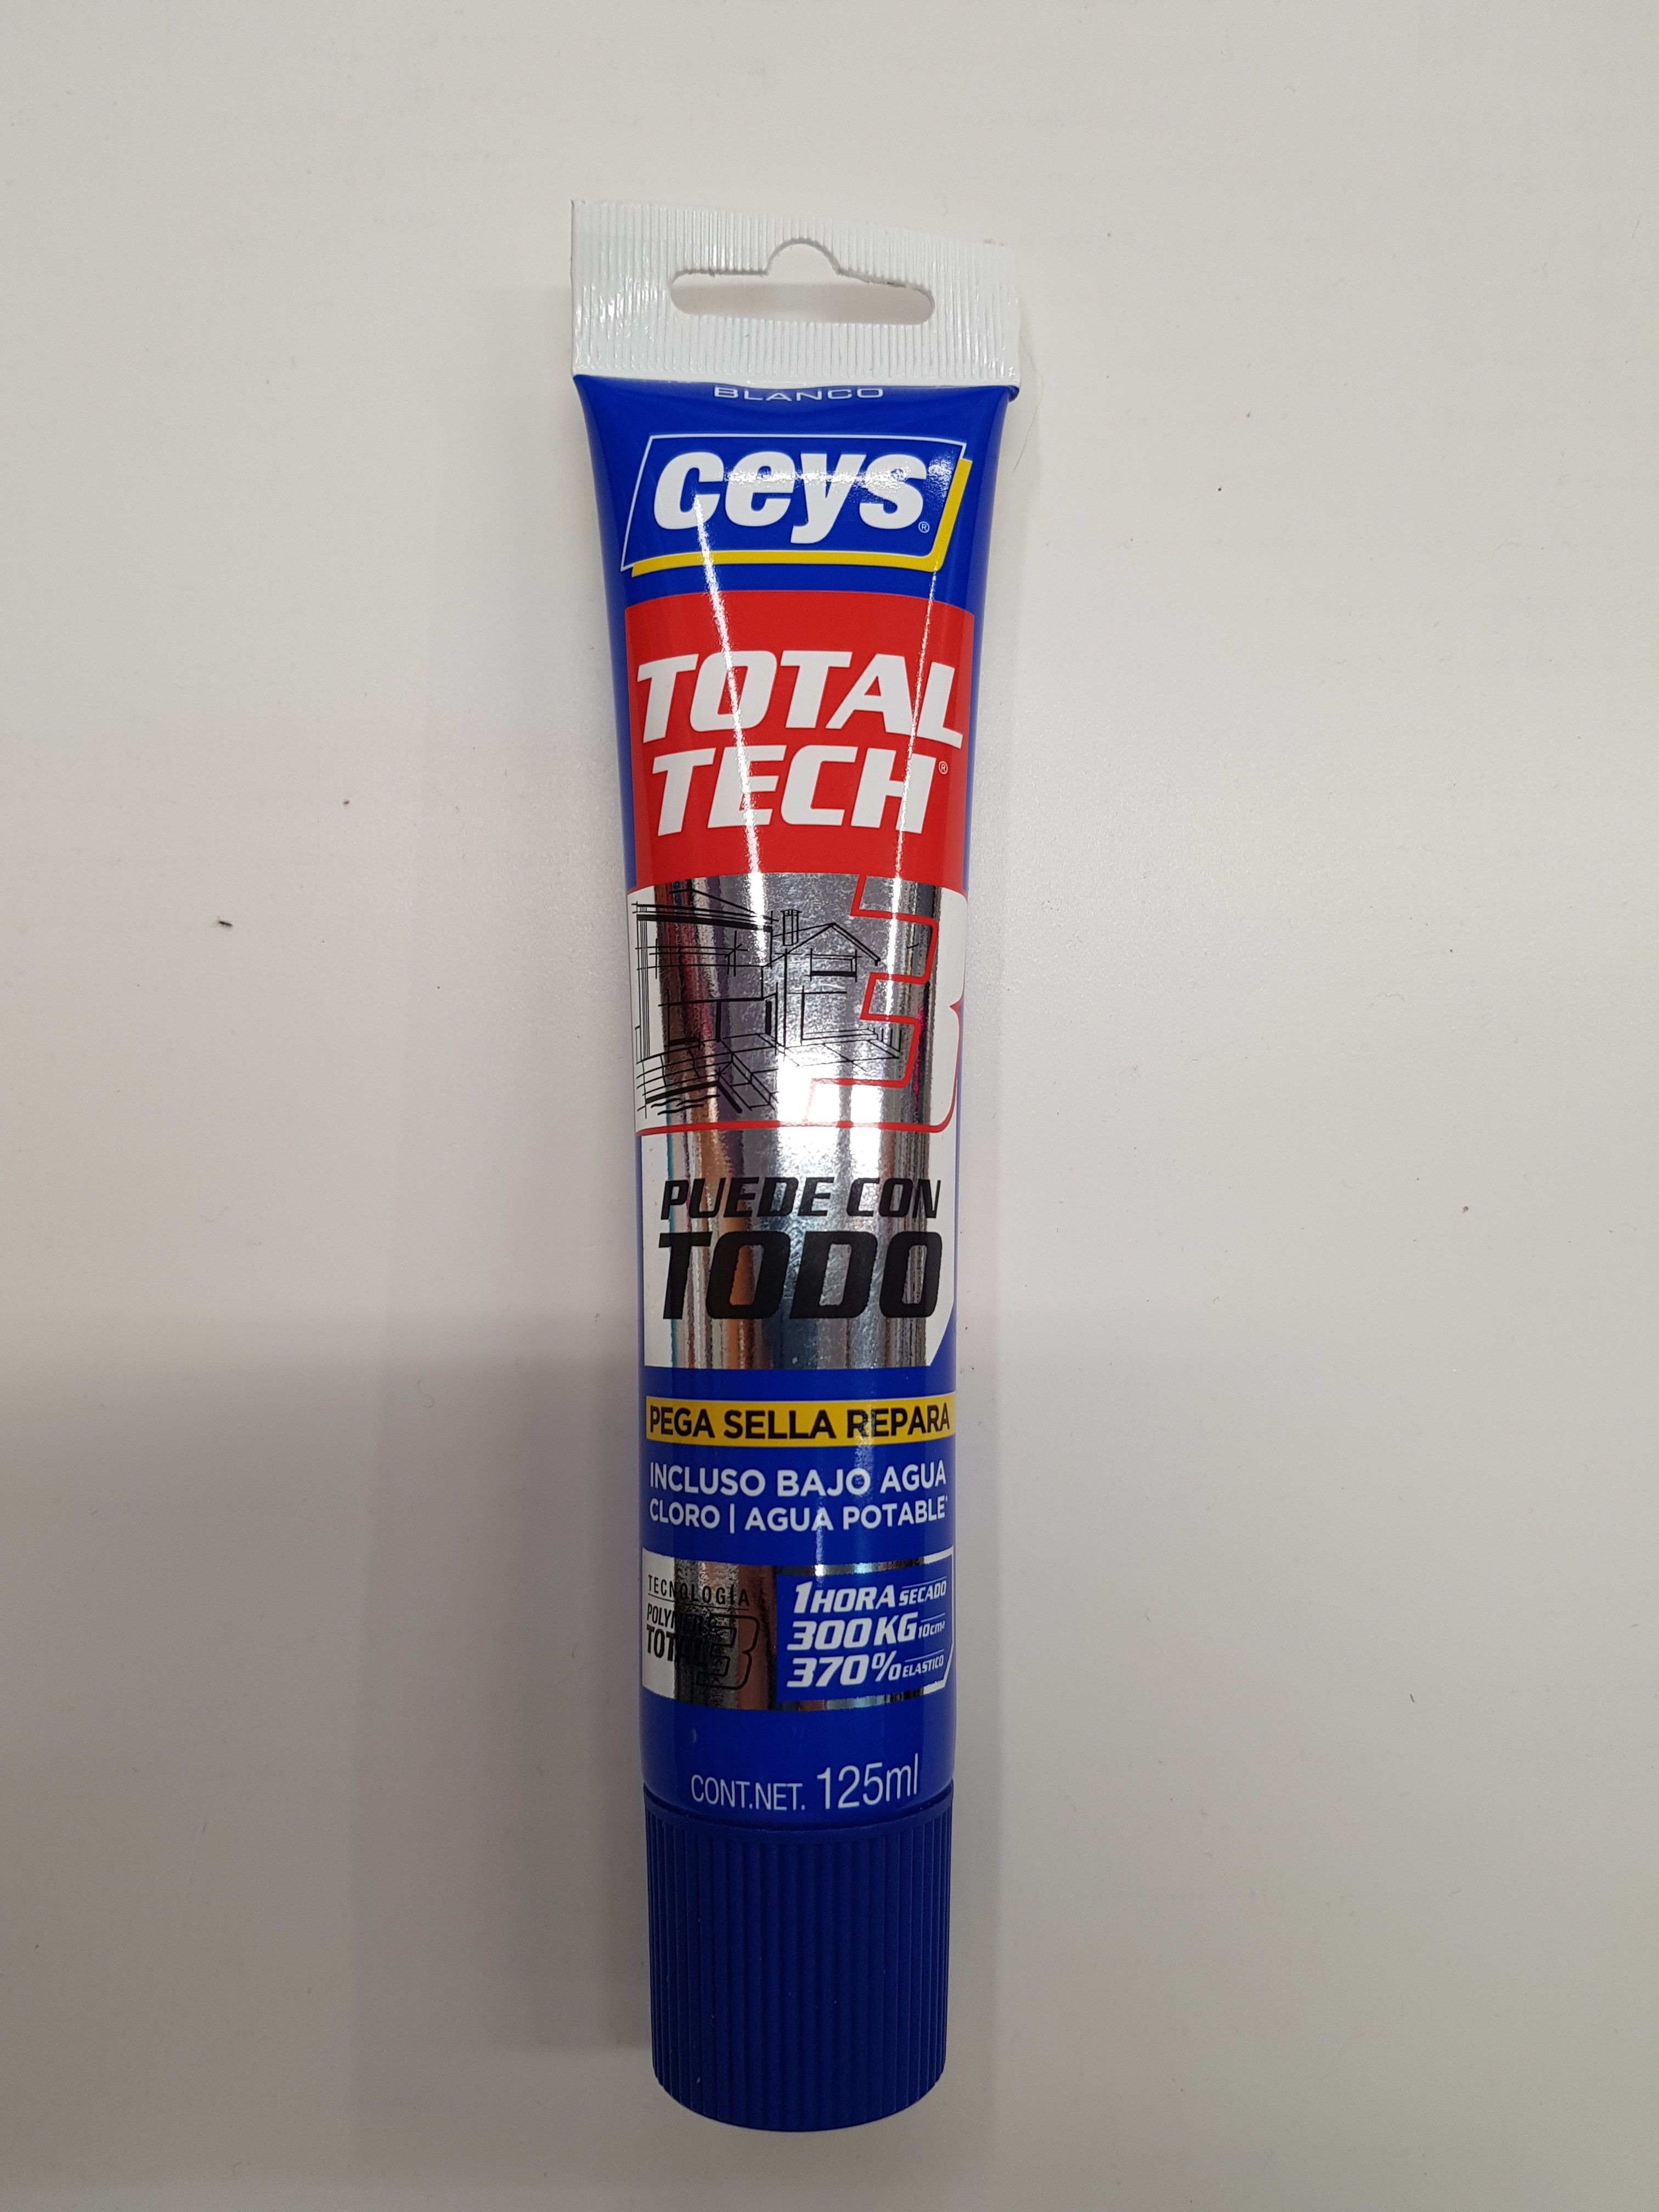 Sellador adhesivo Total Tech blanco 125ml Ceys · Pereda